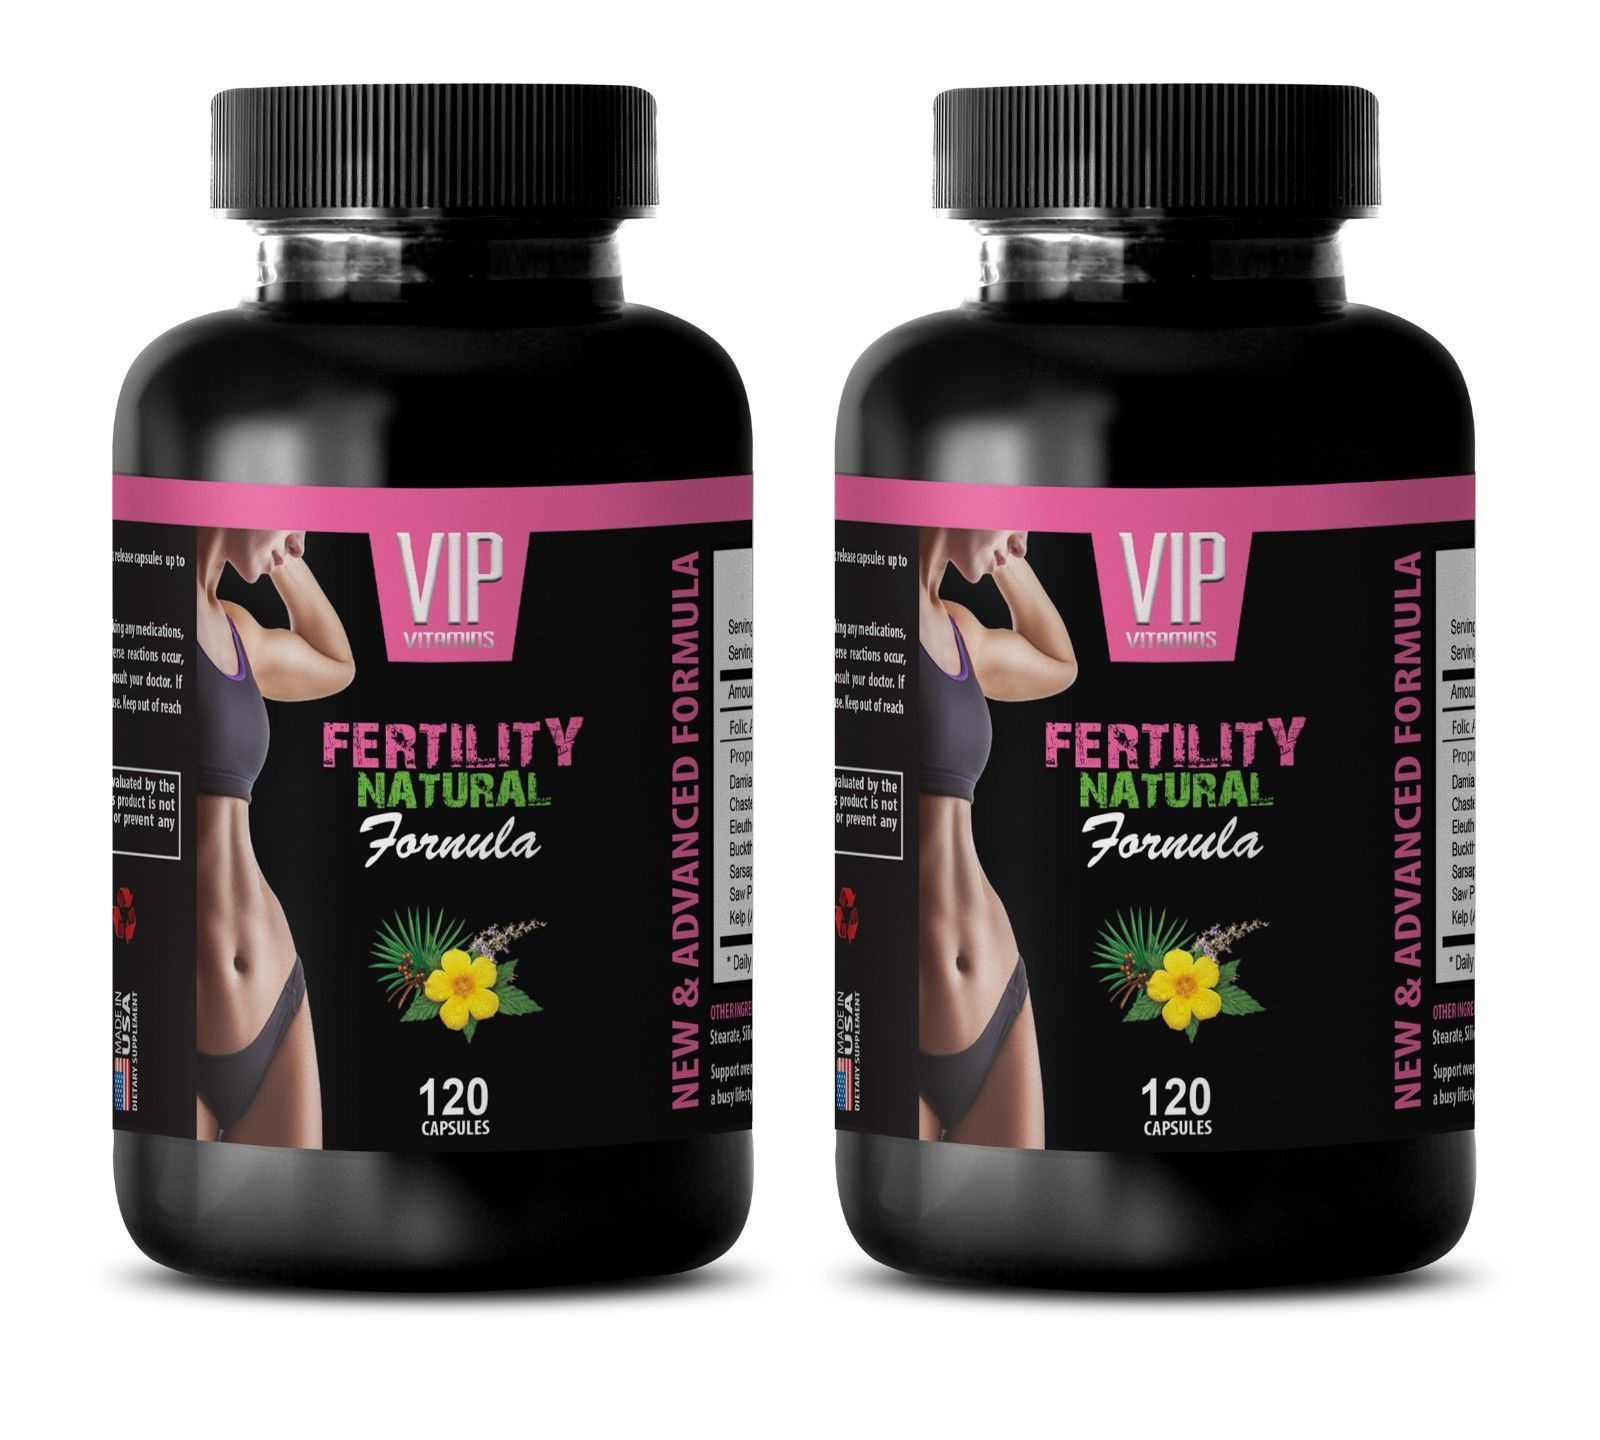 female libido enhancer -2B FERTILITY NATURAL 240 CAPSULES - folate supplement - $33.62